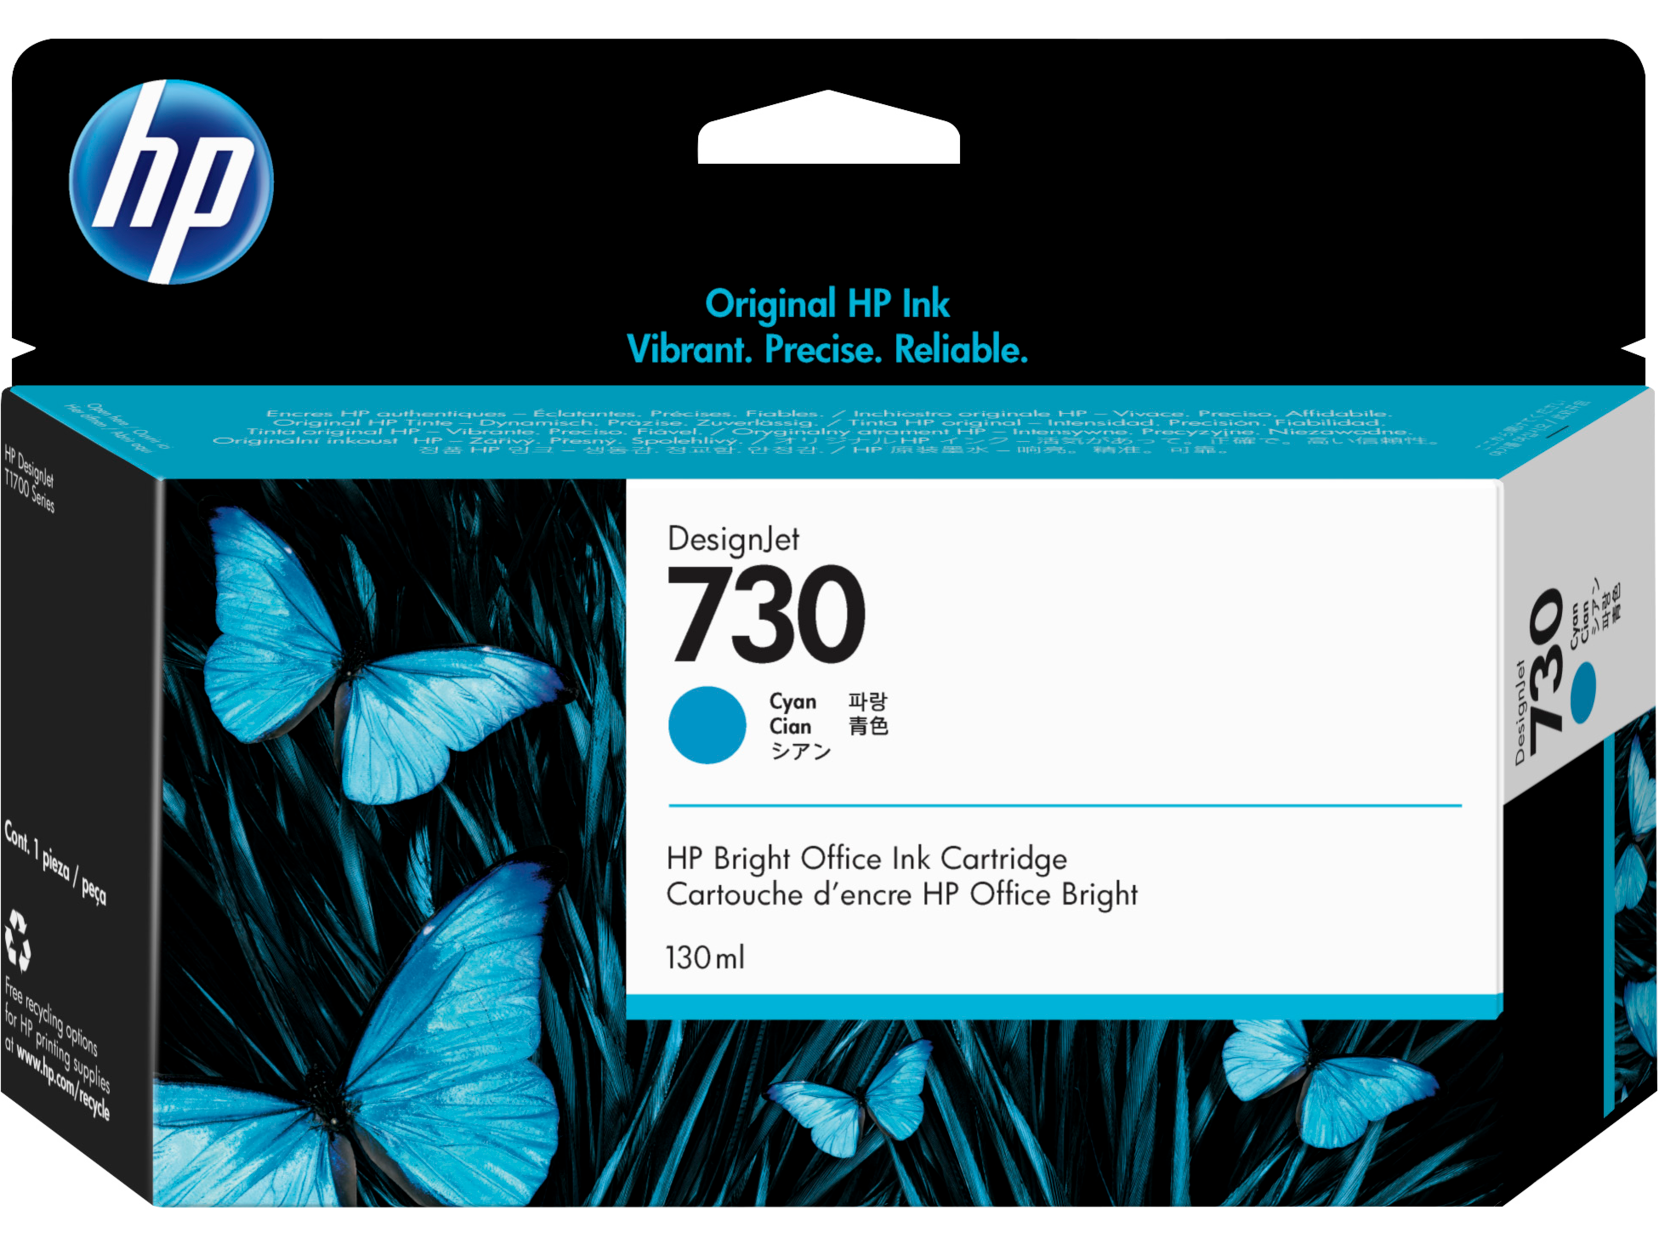 Картридж для печати HP Картридж HP 730 P2V62A вид печати струйный, цвет Голубой, емкость 130мл.